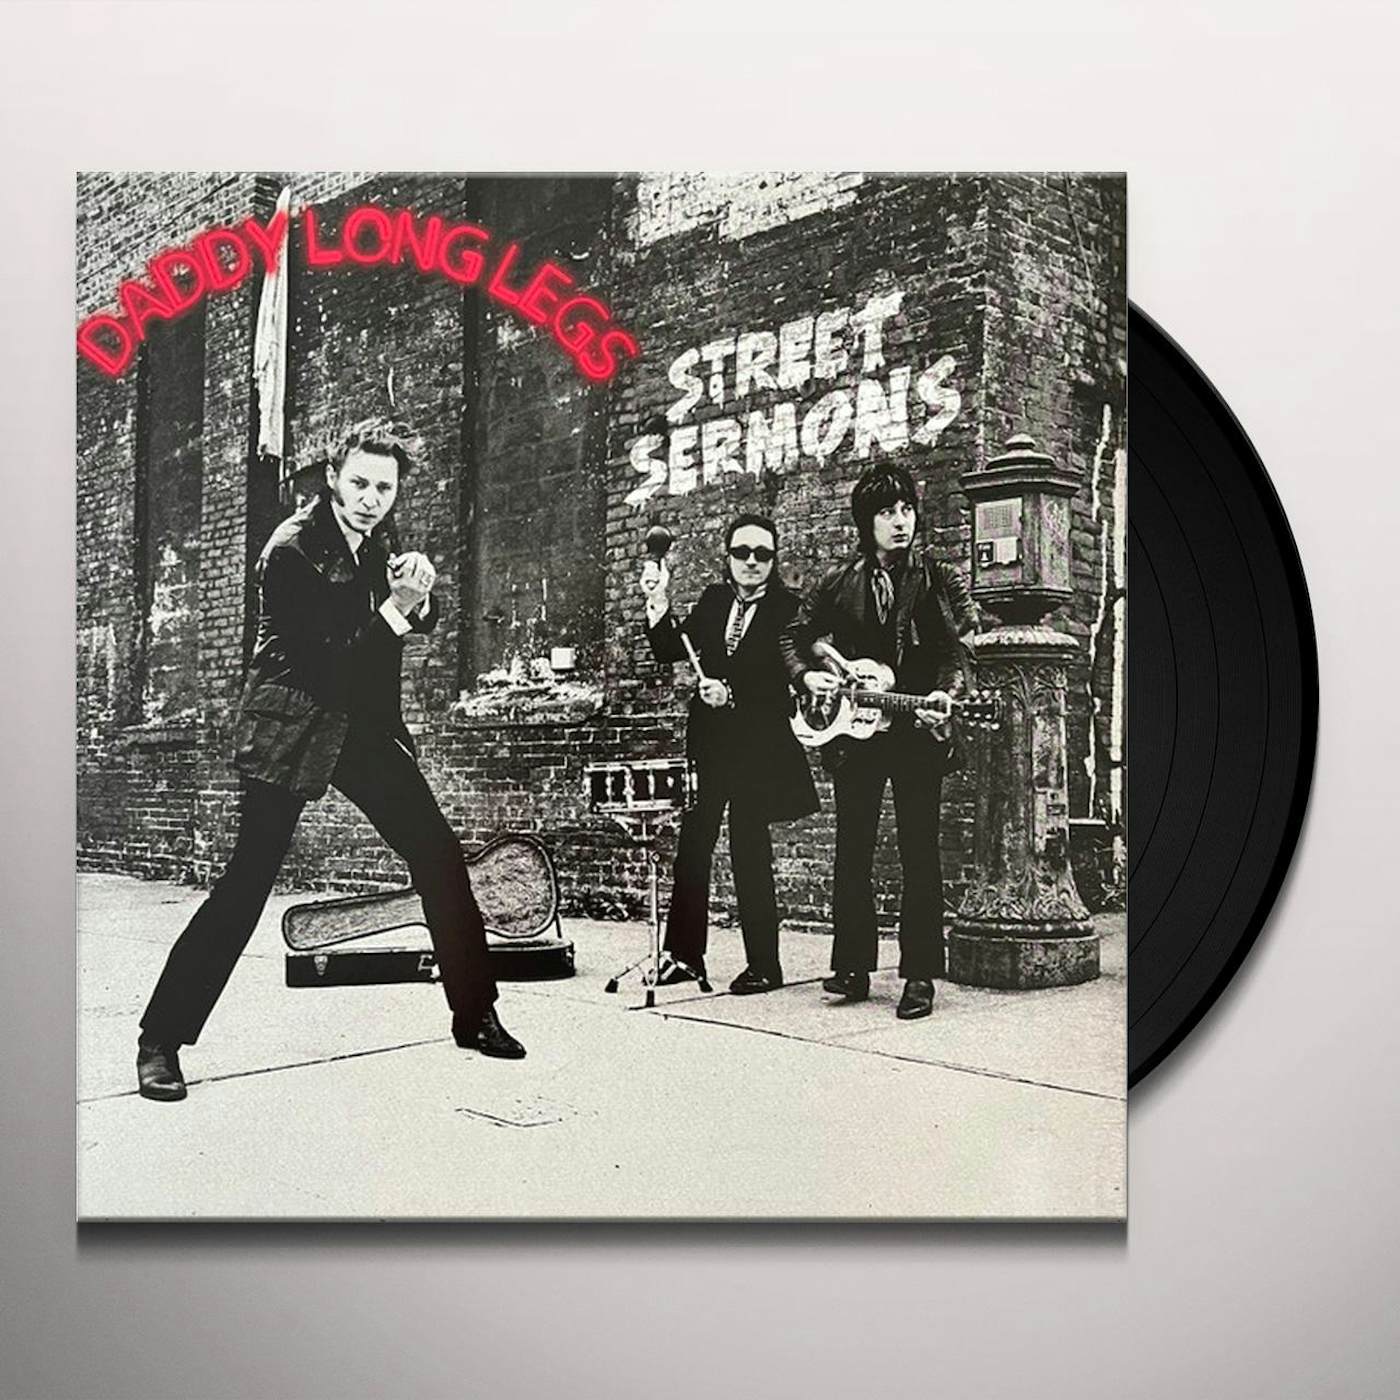 DADDY LONG LEGS STREET SERMONS Vinyl Record